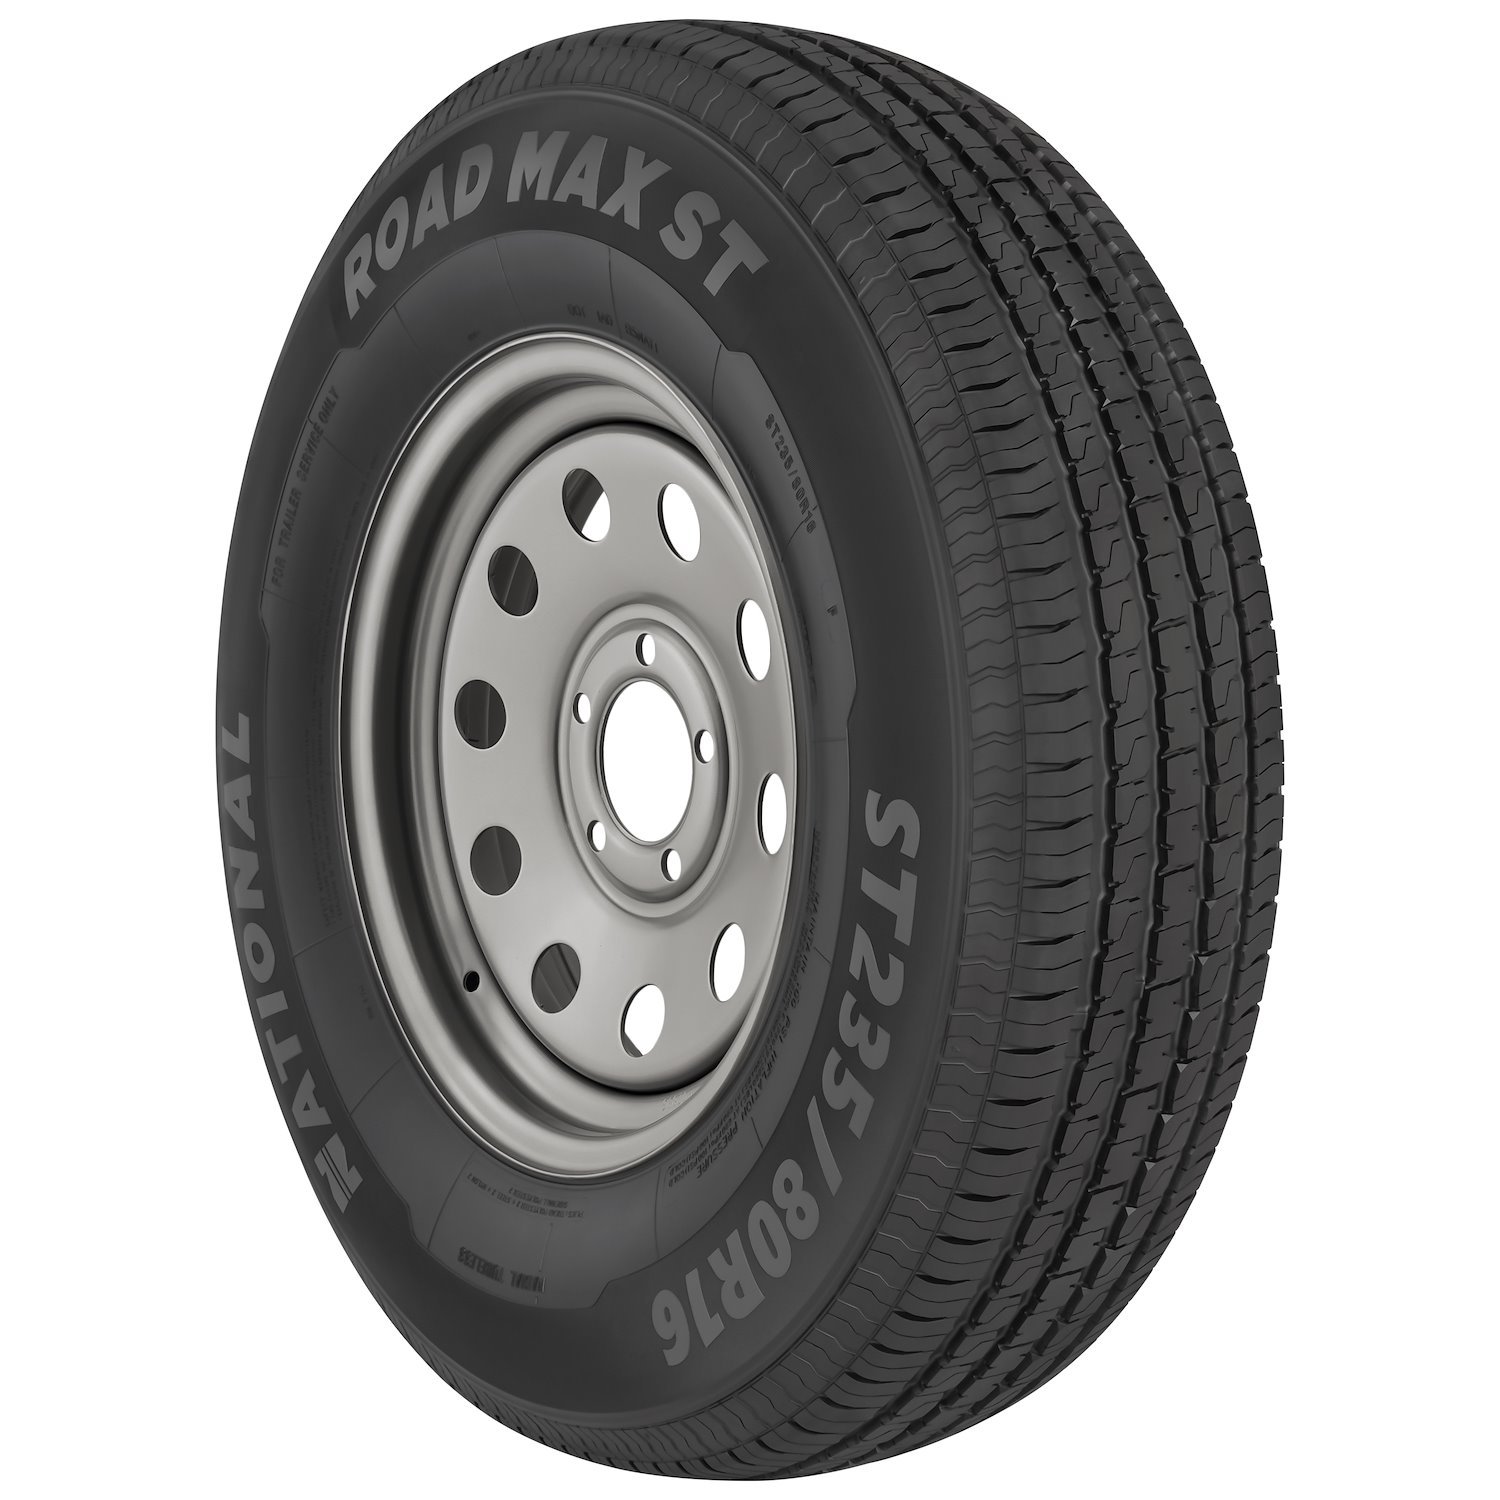 NRM16 Road MAX ST Tire, ST185/80R13